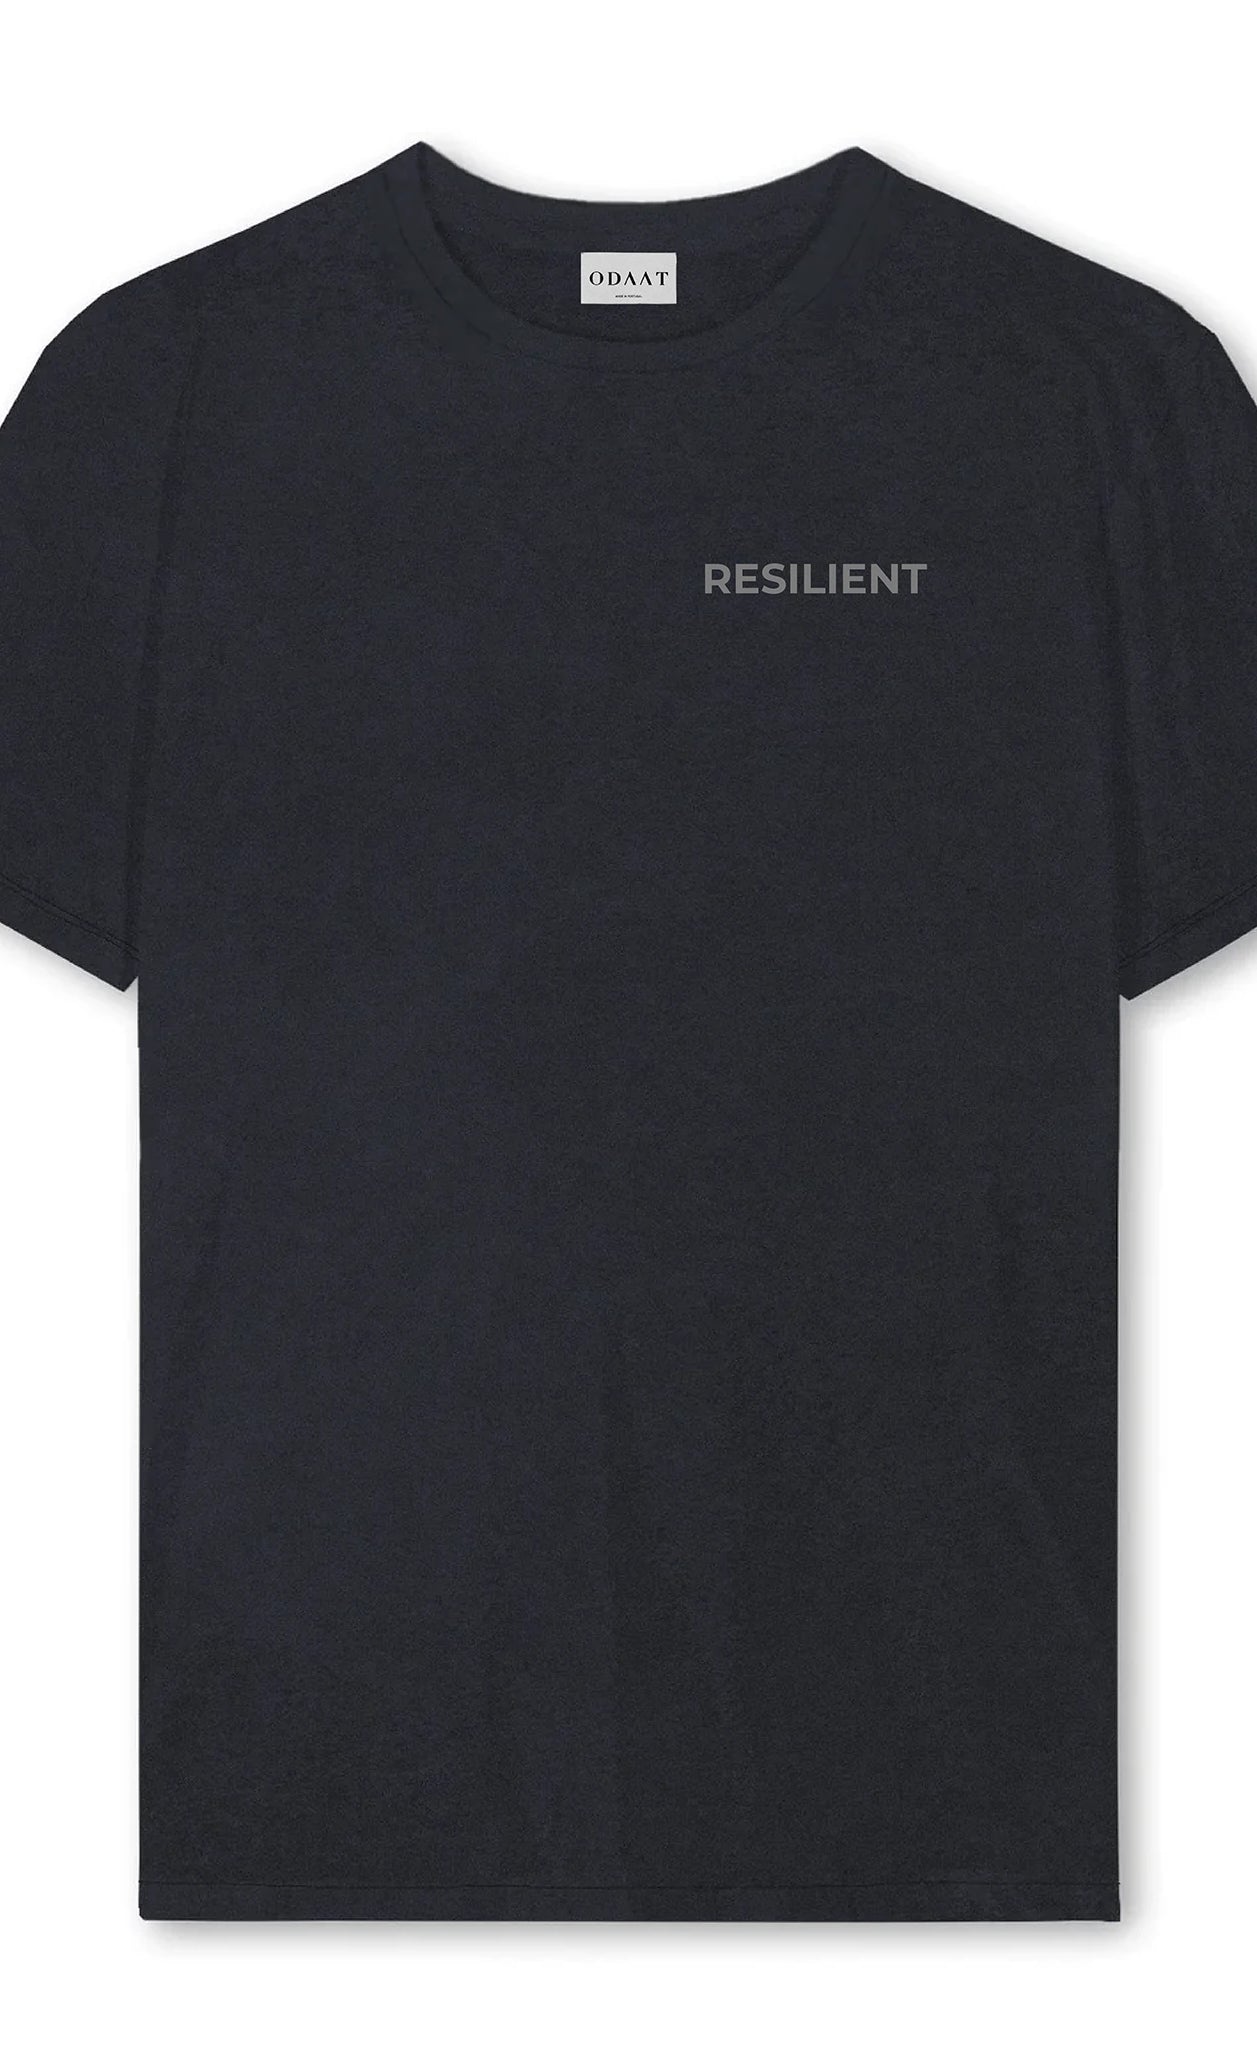 ODAAT Apparel, Resilient T-Shirt, Vintage Black 